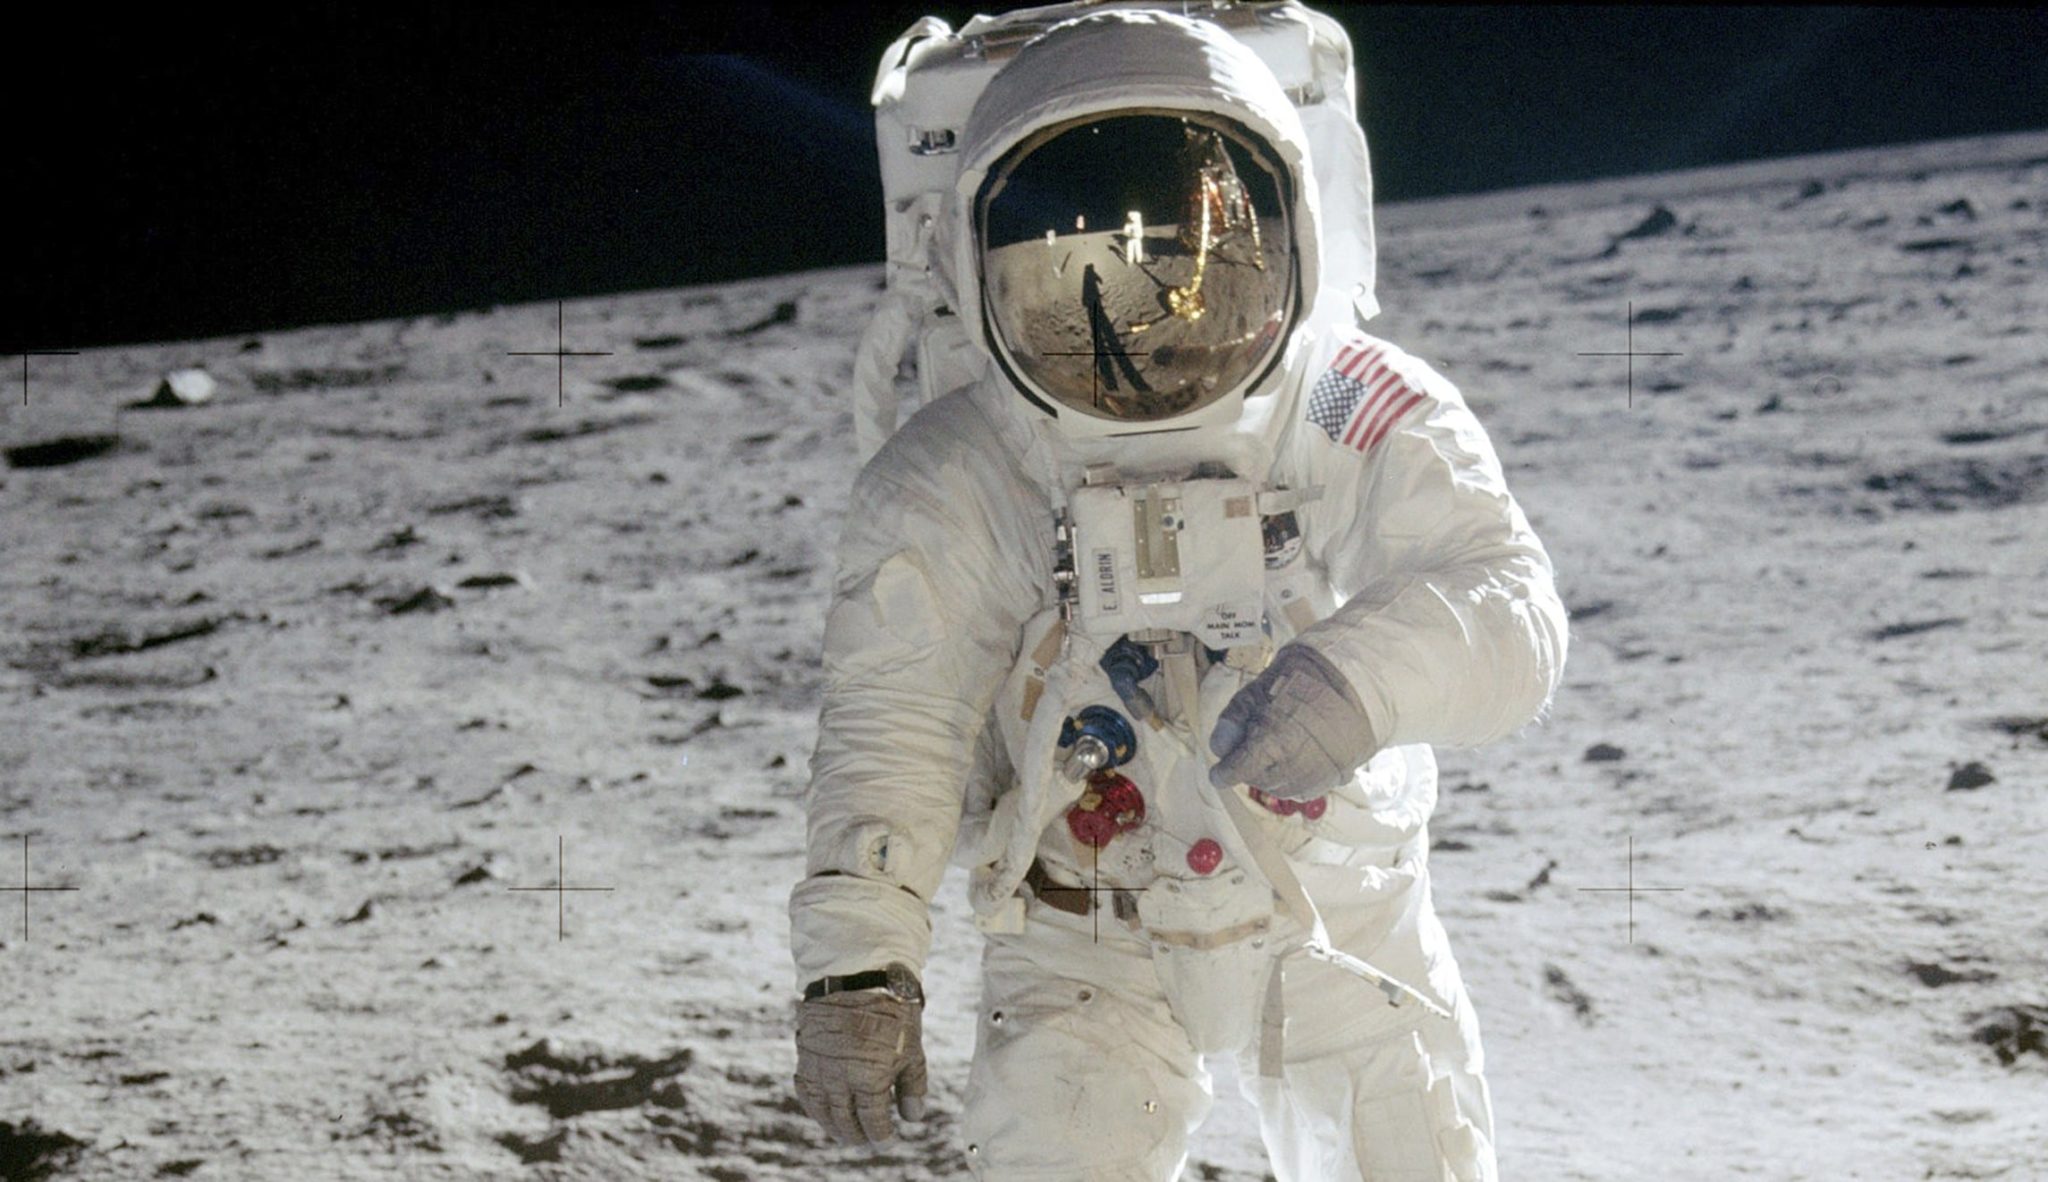 Man landed on the moon. Апполо 11 на Луне.